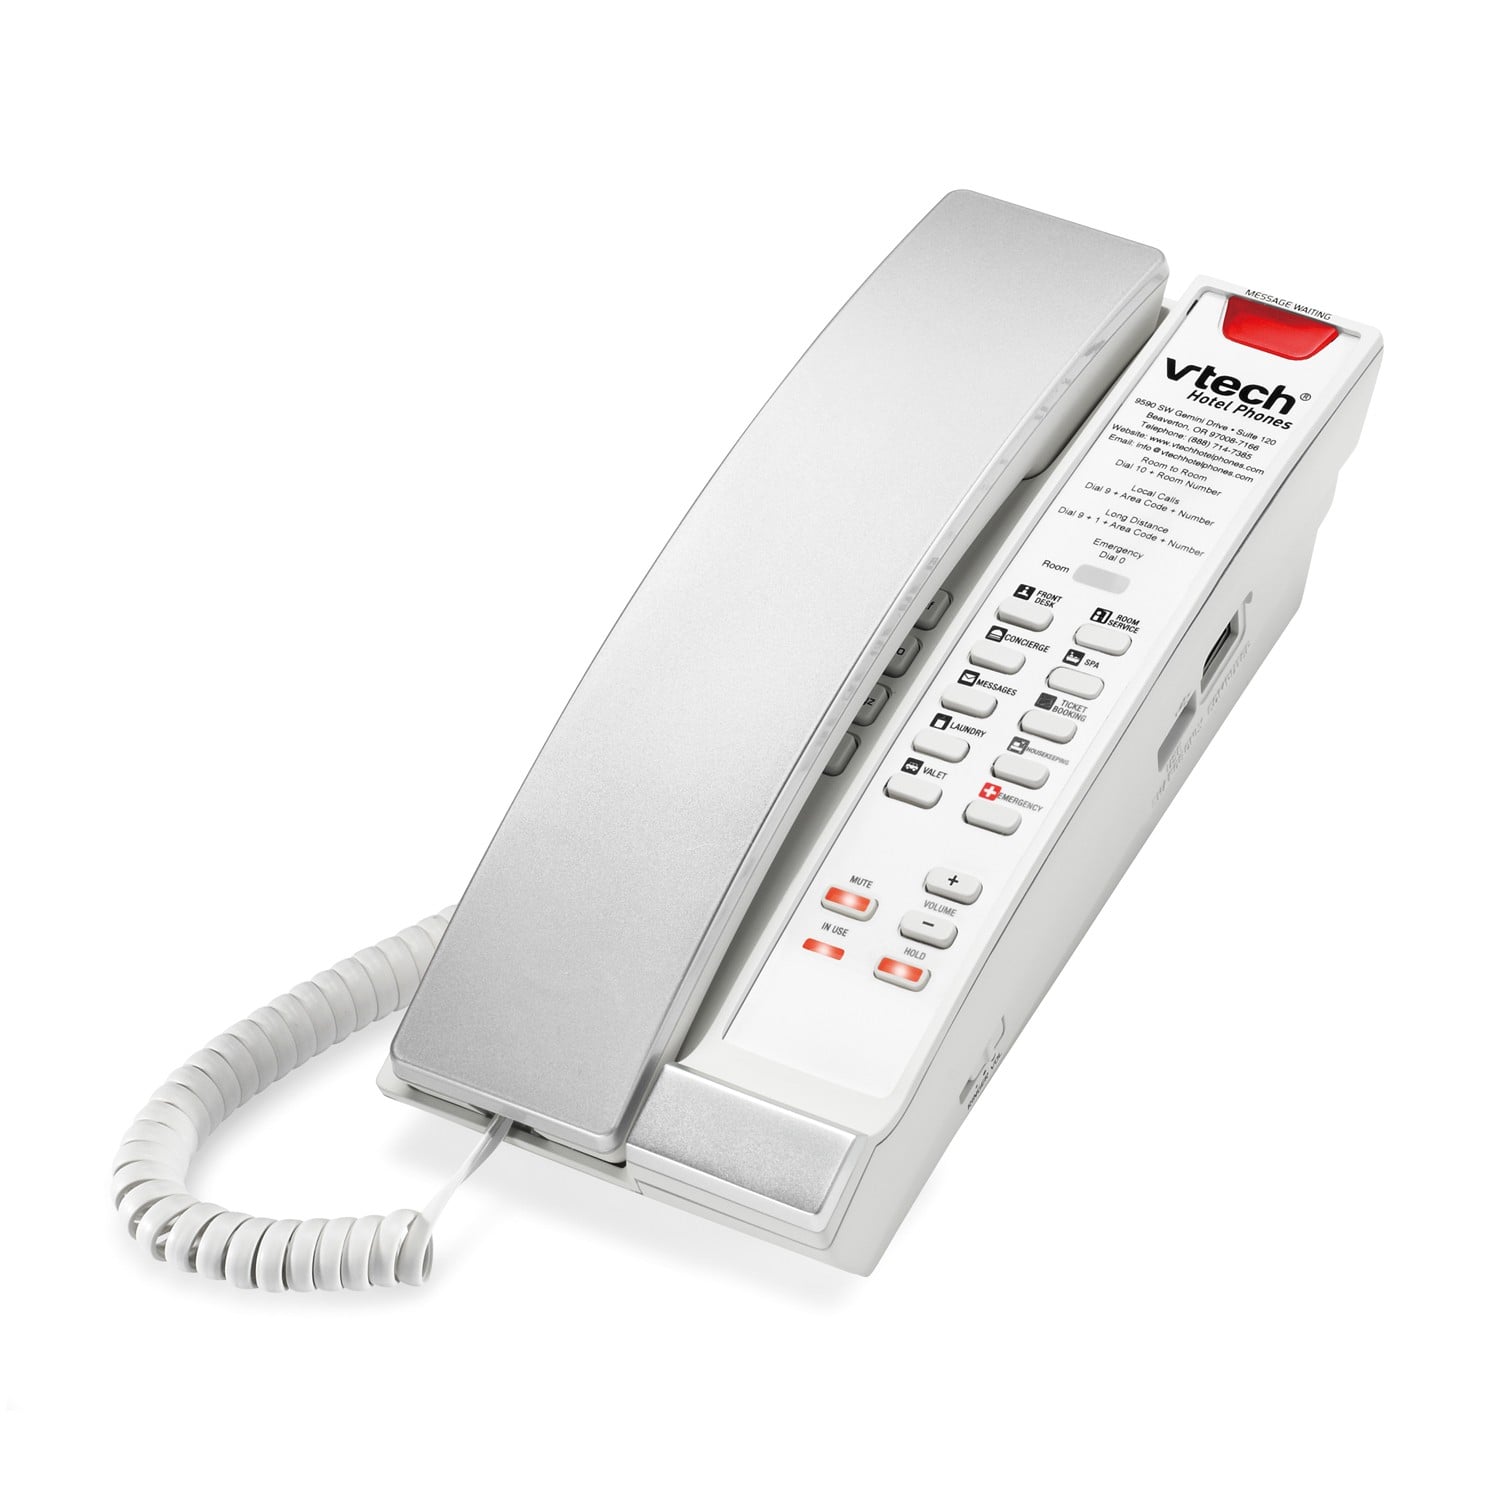 1-Line Contemporary SIP Petite Phone - VTech® Hotel Phones